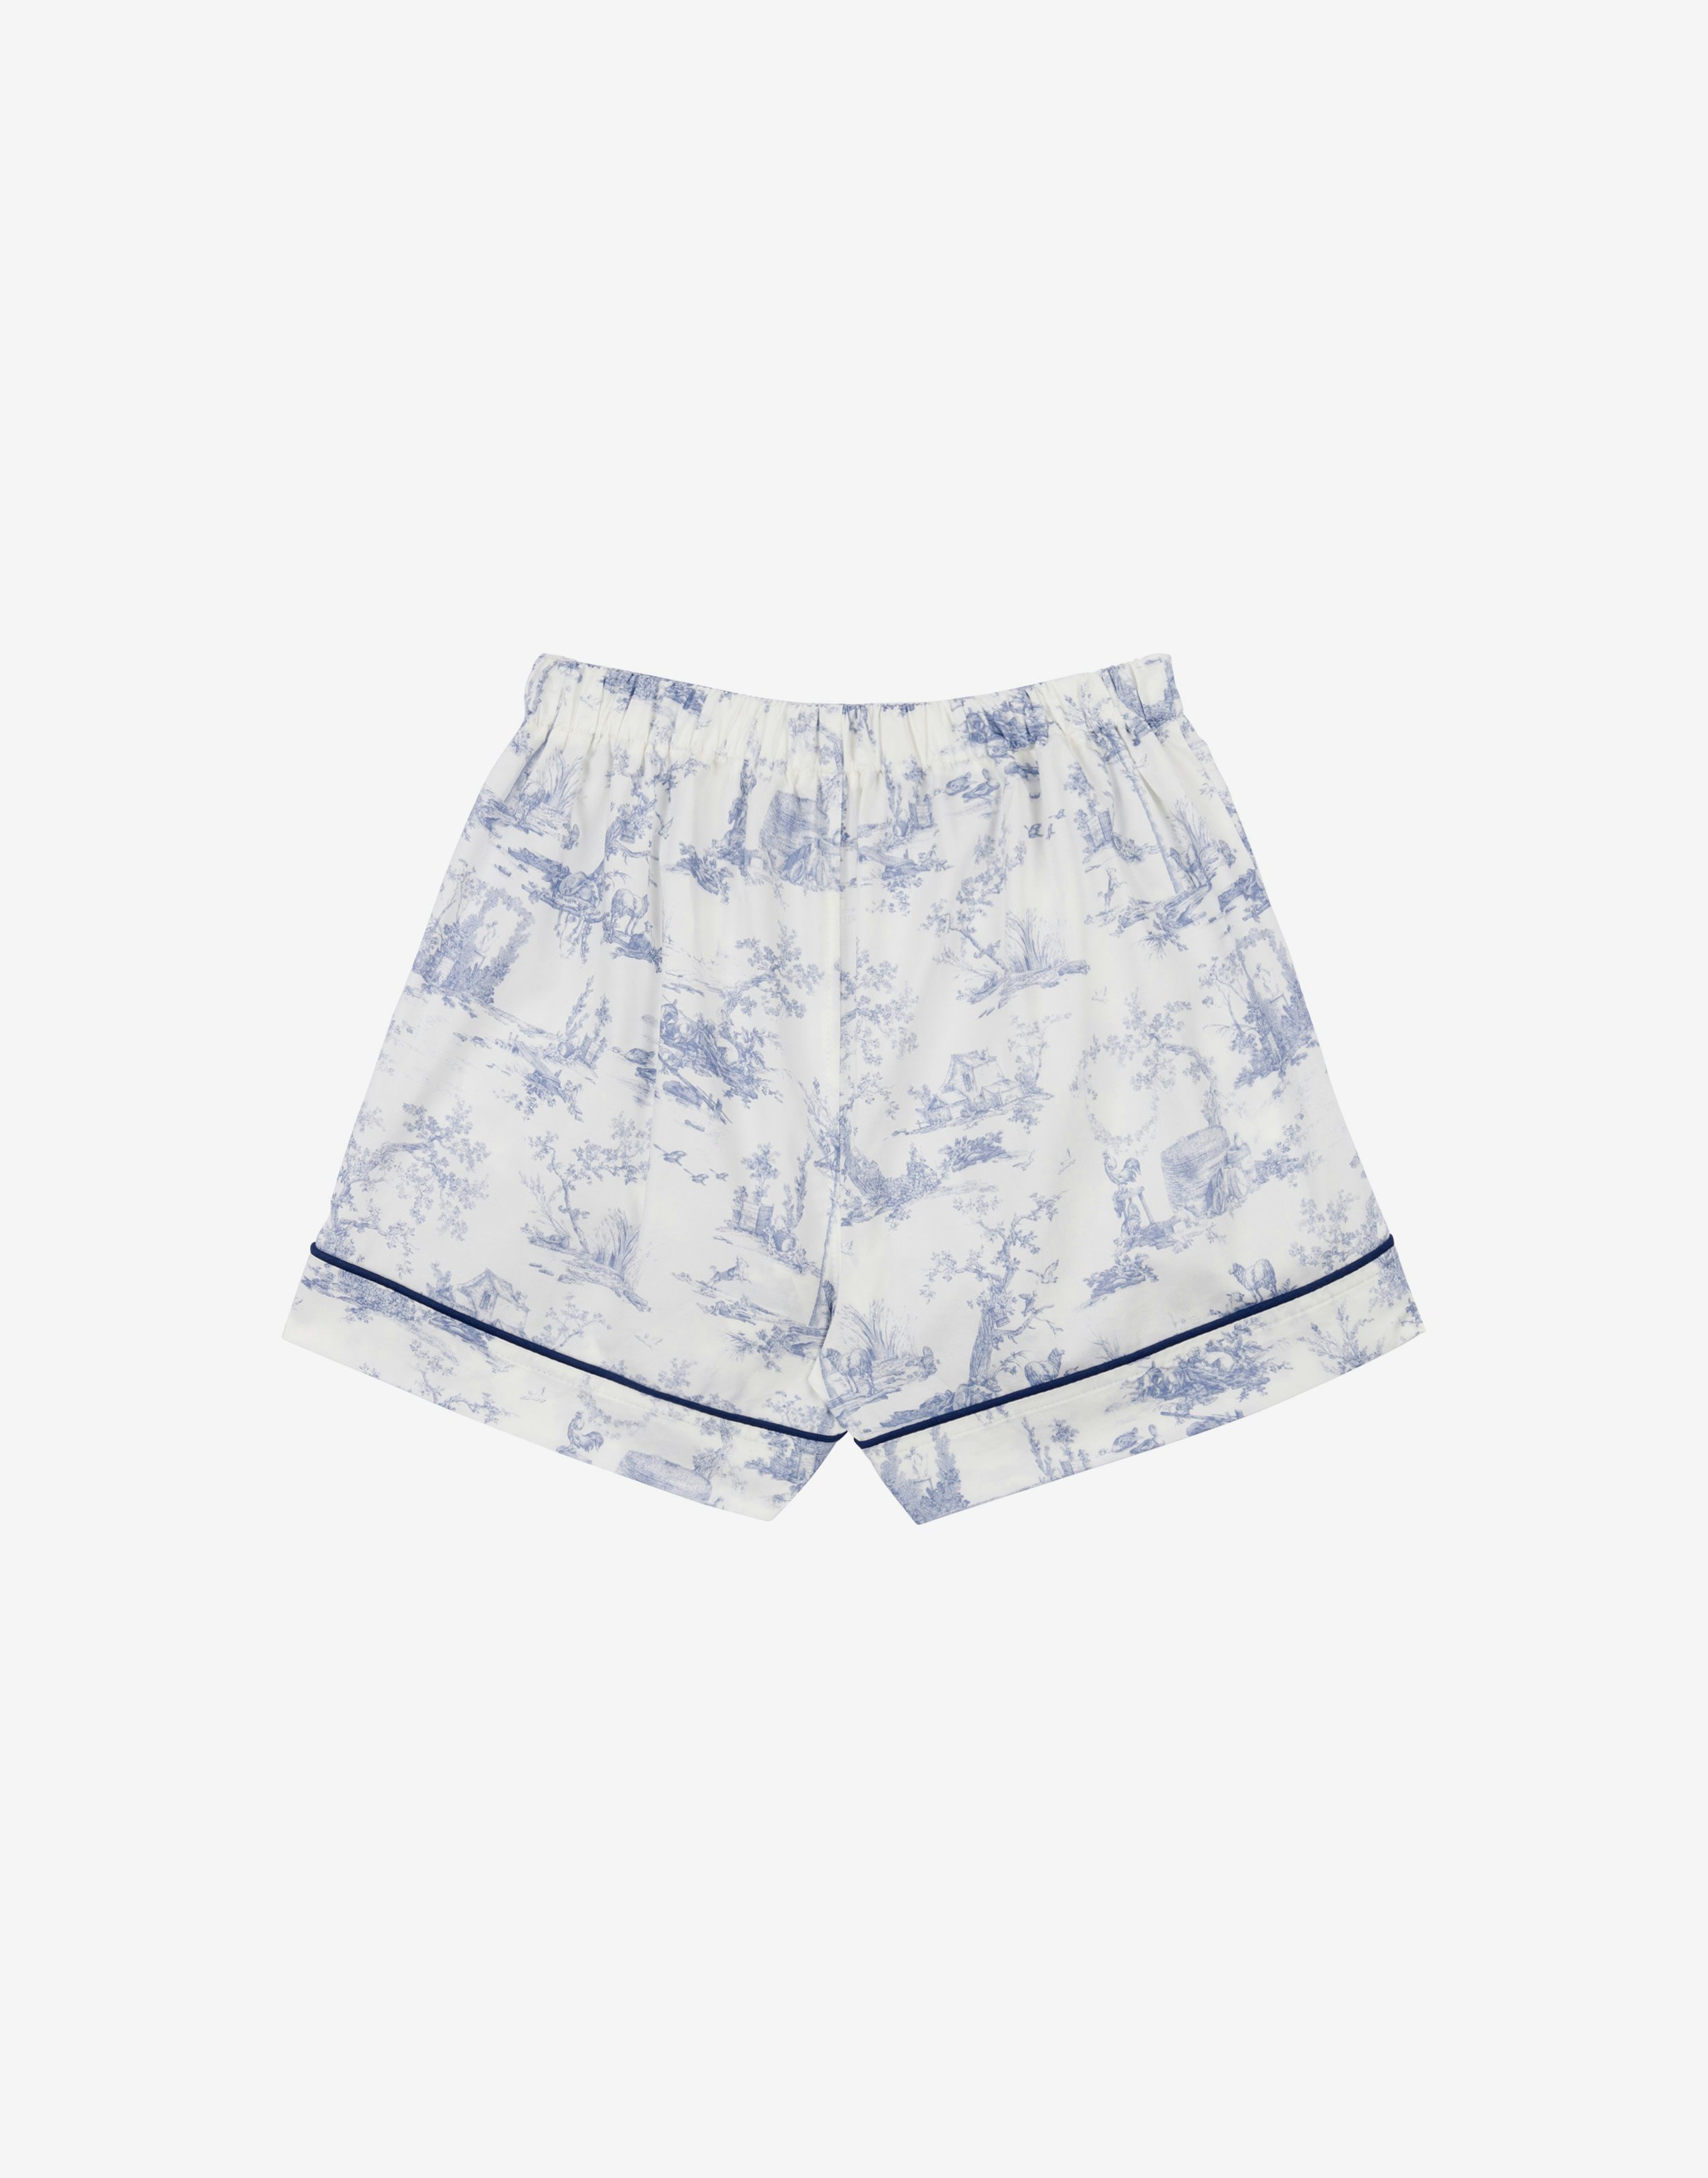 Kids' cotton Bermuda shorts with Toile de Jouy print